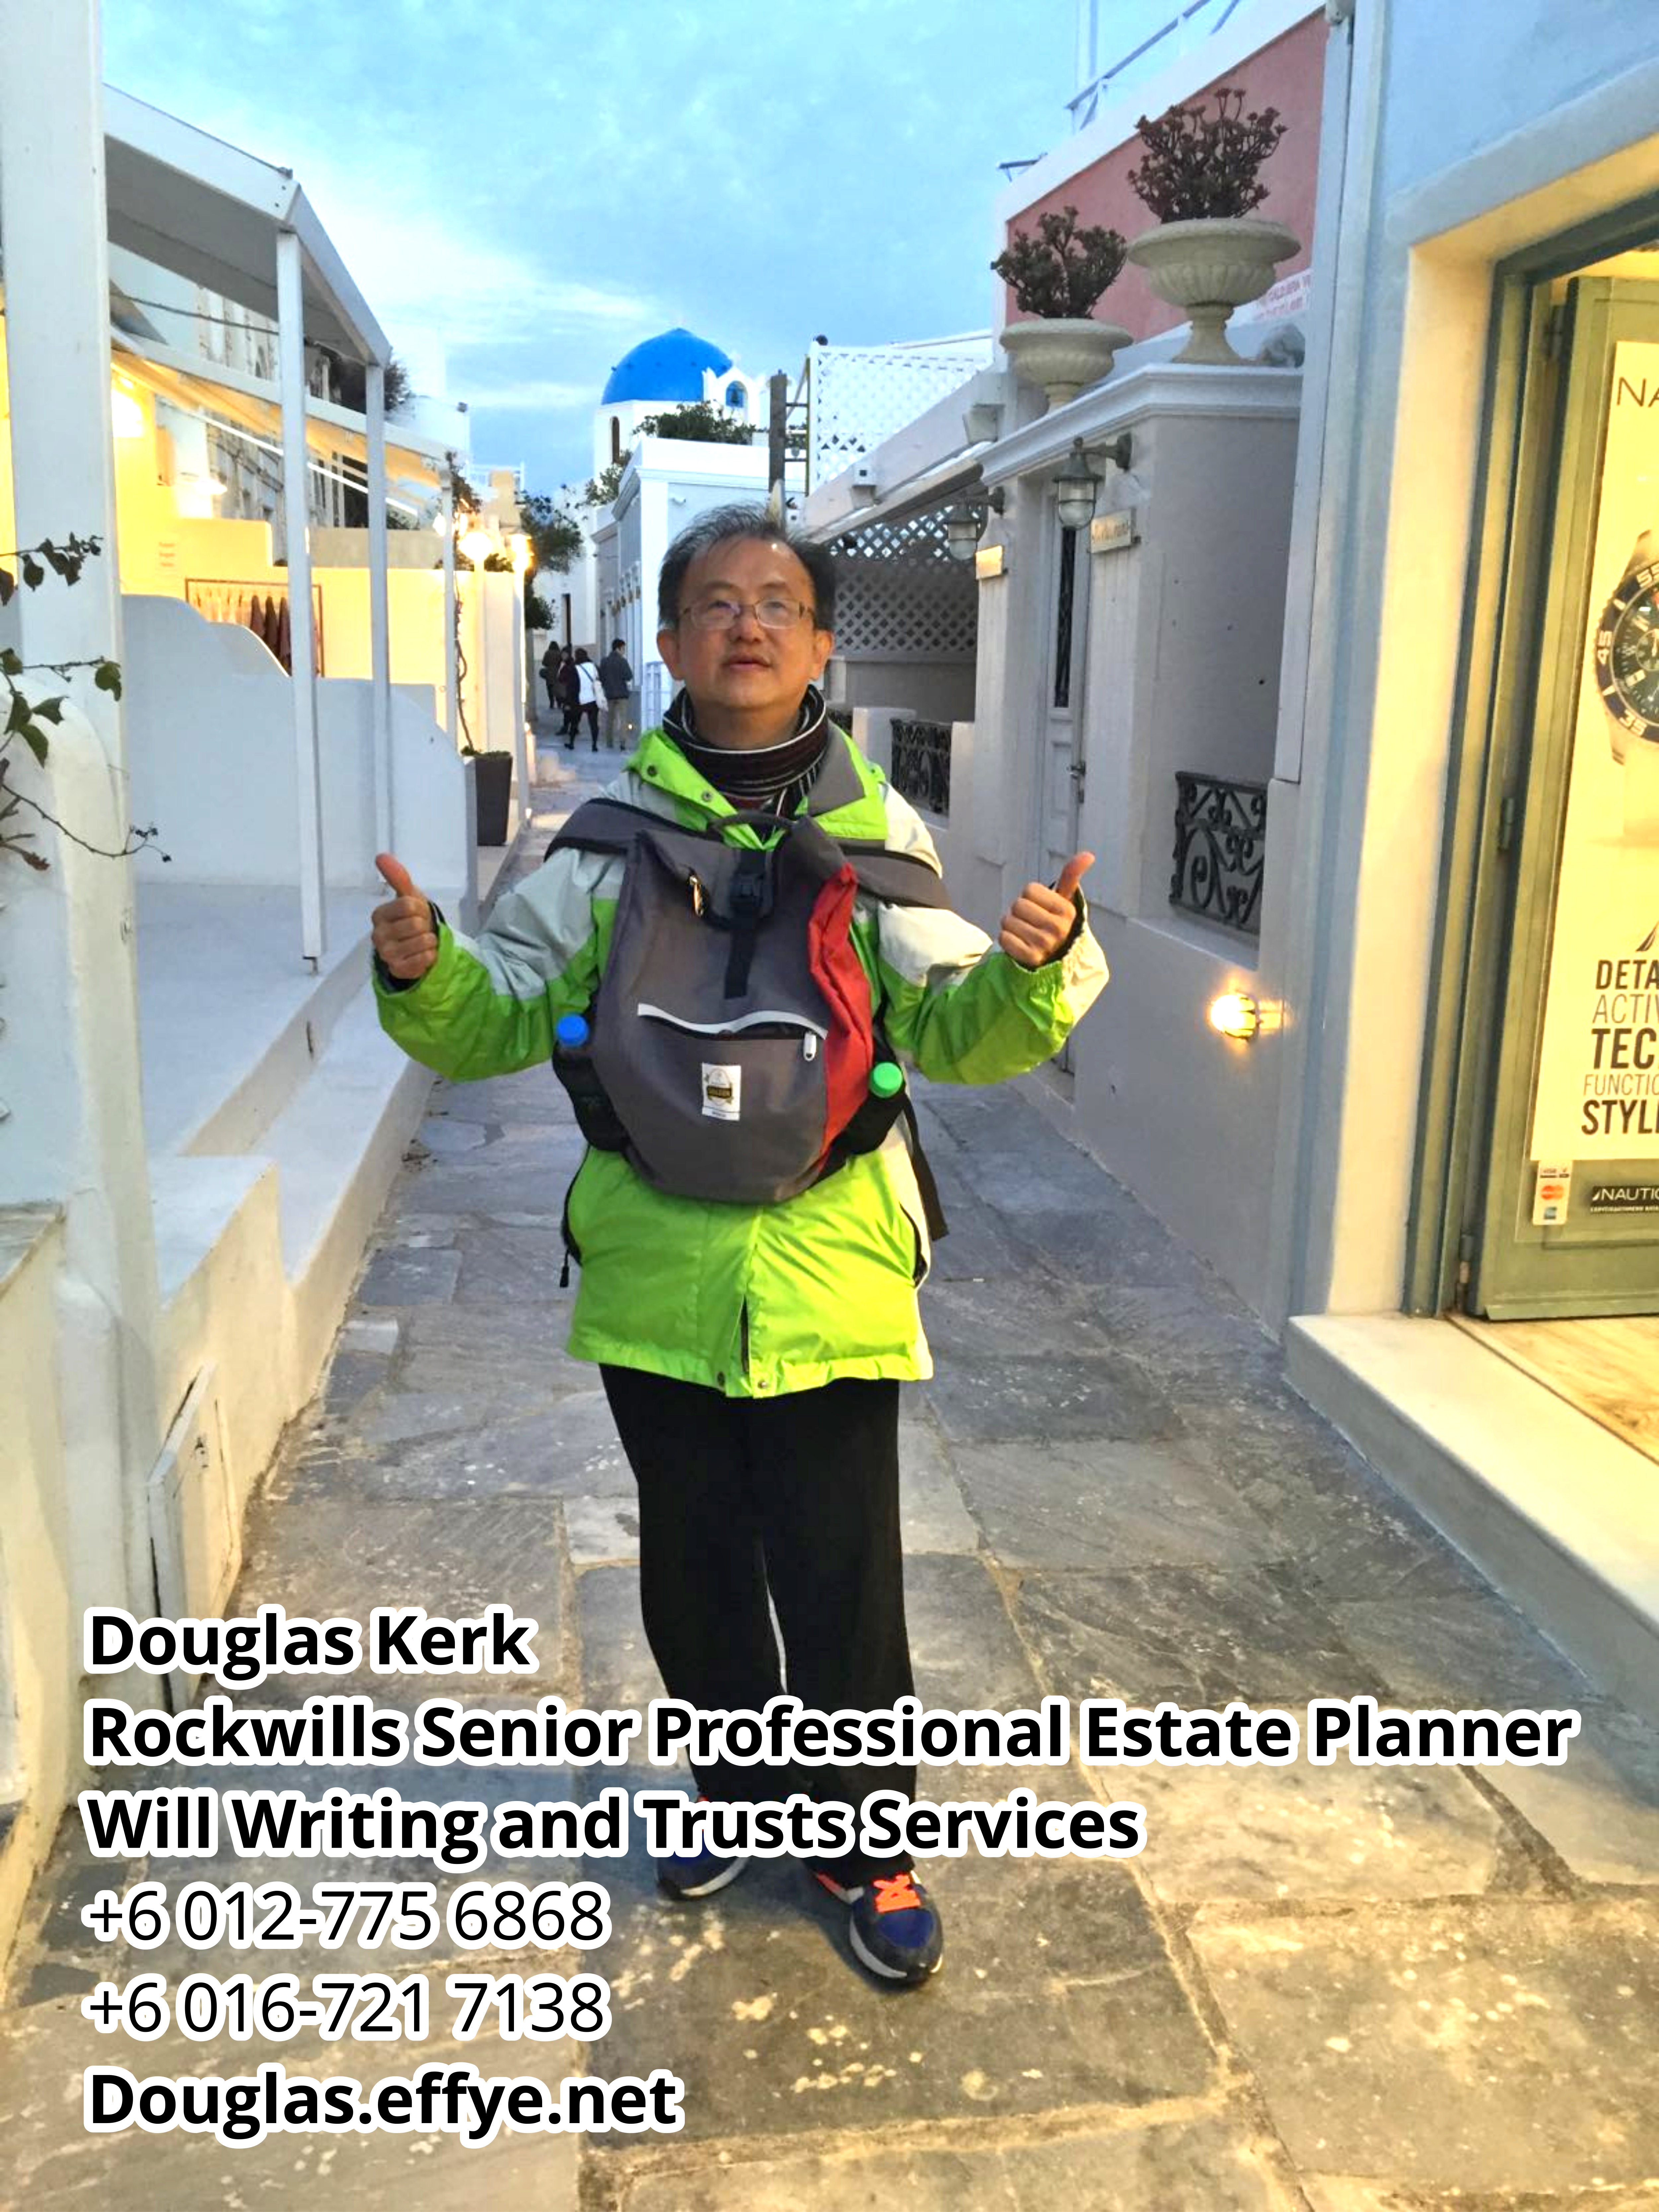 Douglas Kerk Rockwills Senior Professional Estate Planner - Will Writing and Trusts Services Batu Pahat and Kluang Johor Malaysia Property Management PA03-38